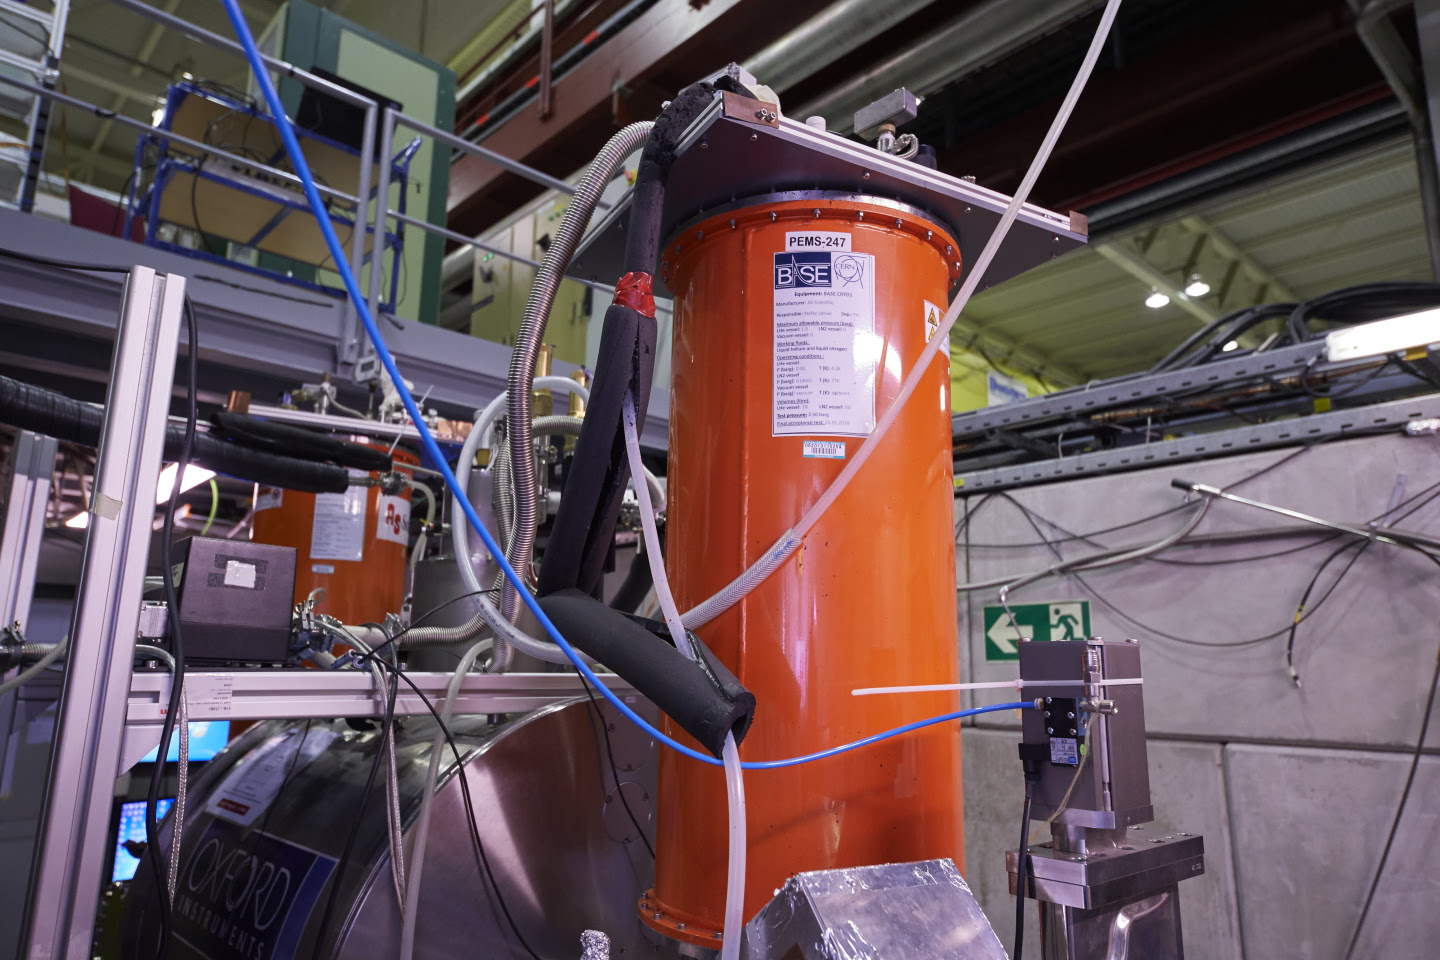 BASE breaks new ground in matter-antimatter comparisons